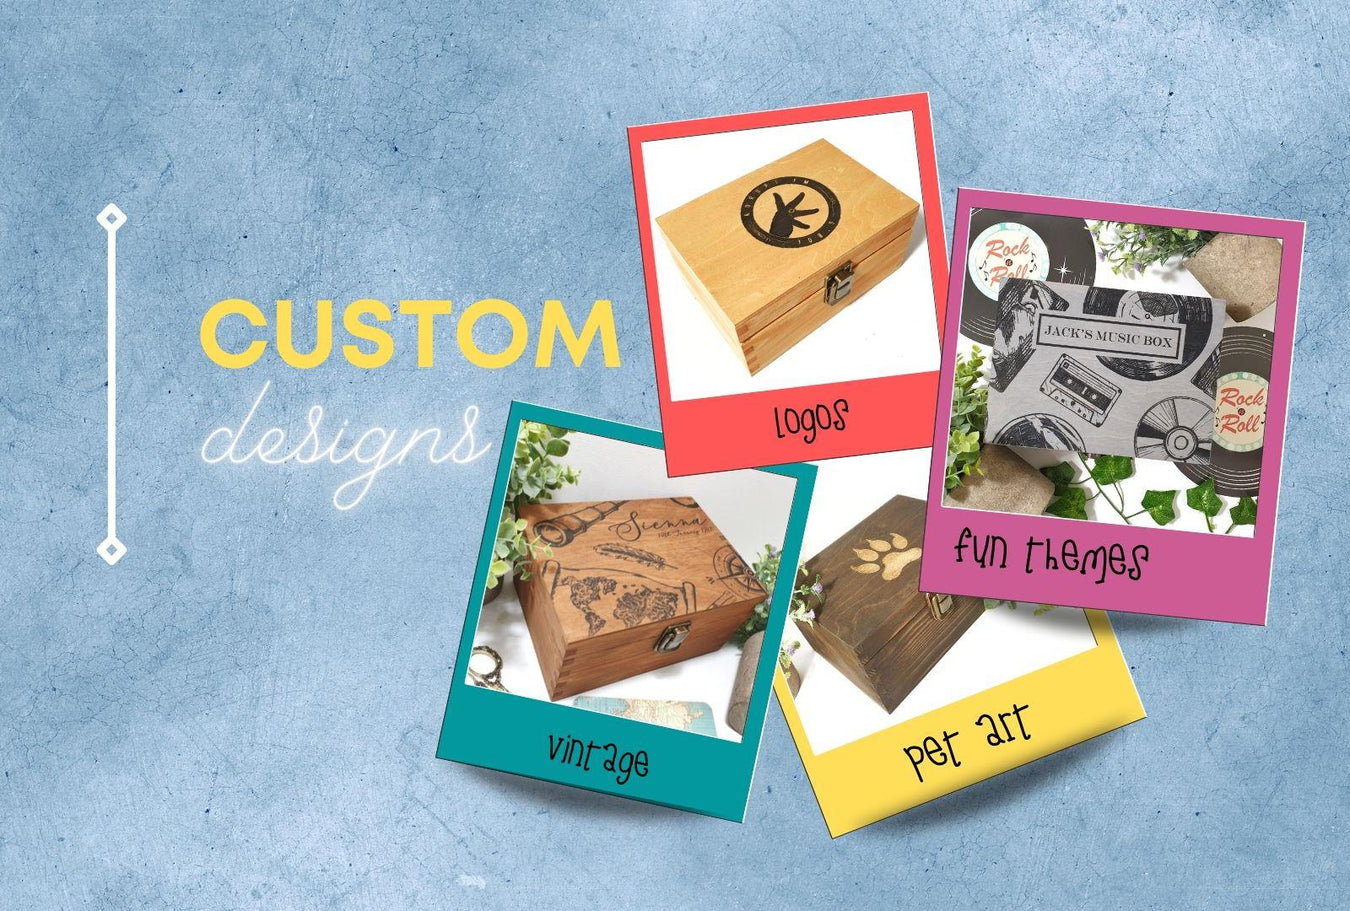 Custom_designs_keepsake_box_smaller_size_9